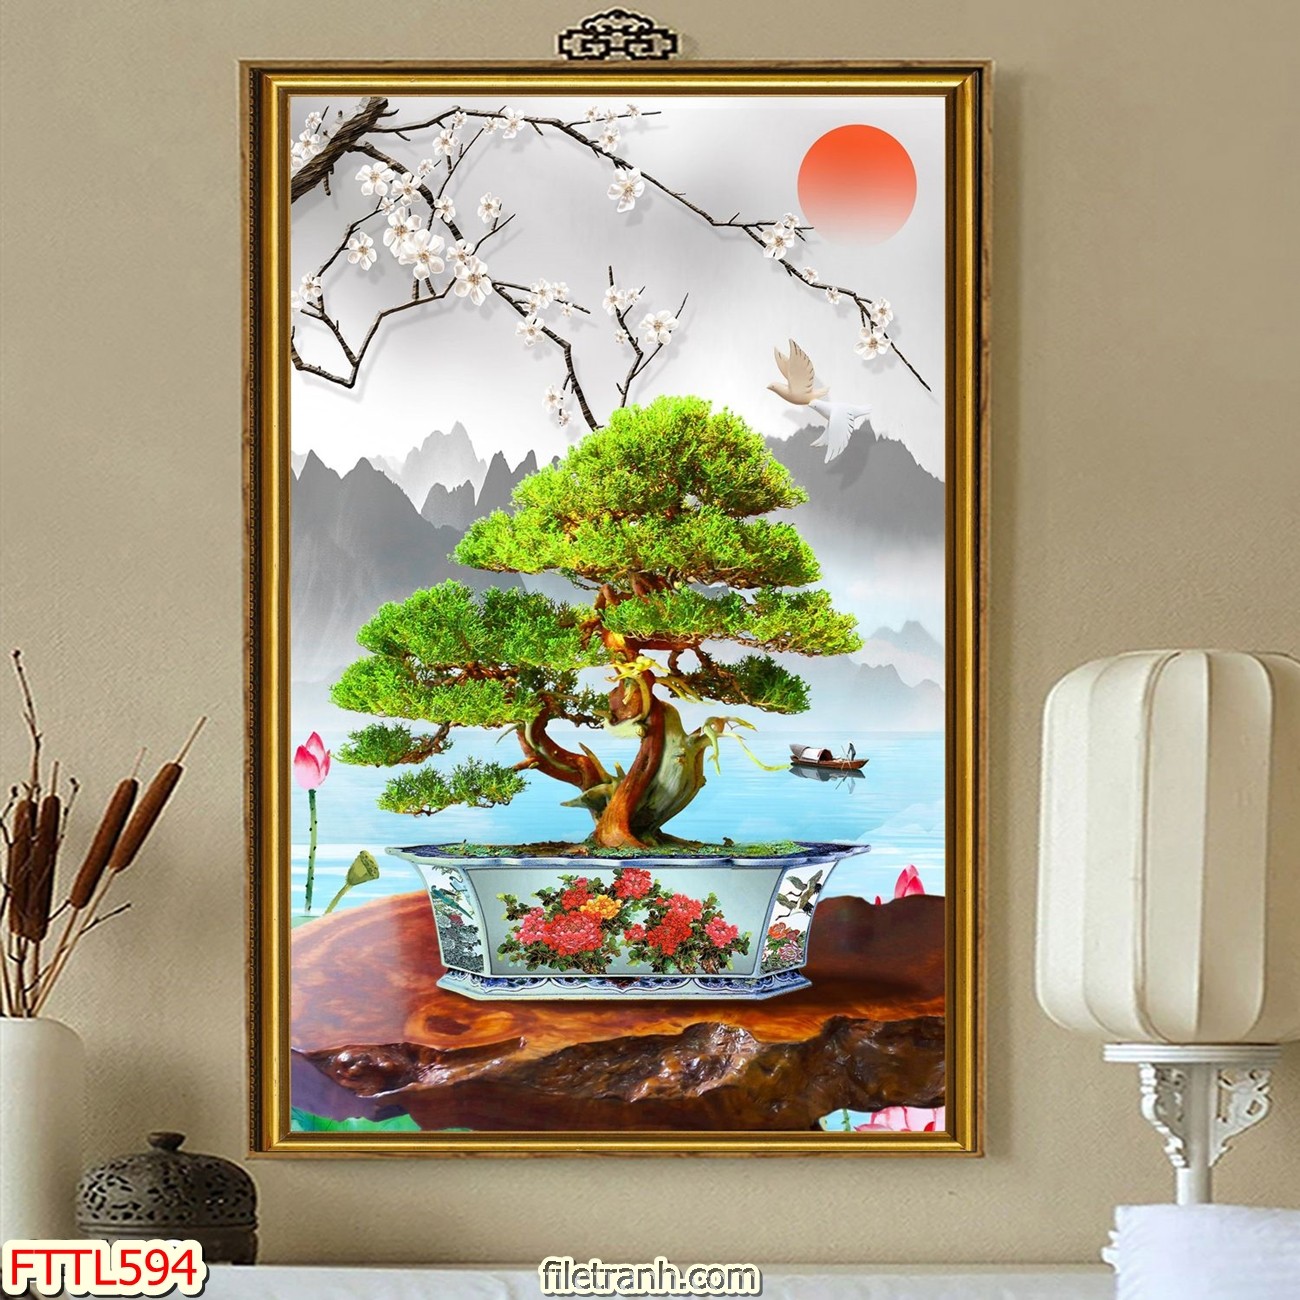 https://filetranh.com/file-tranh-chau-mai-bonsai/file-tranh-chau-mai-bonsai-fttl594.html